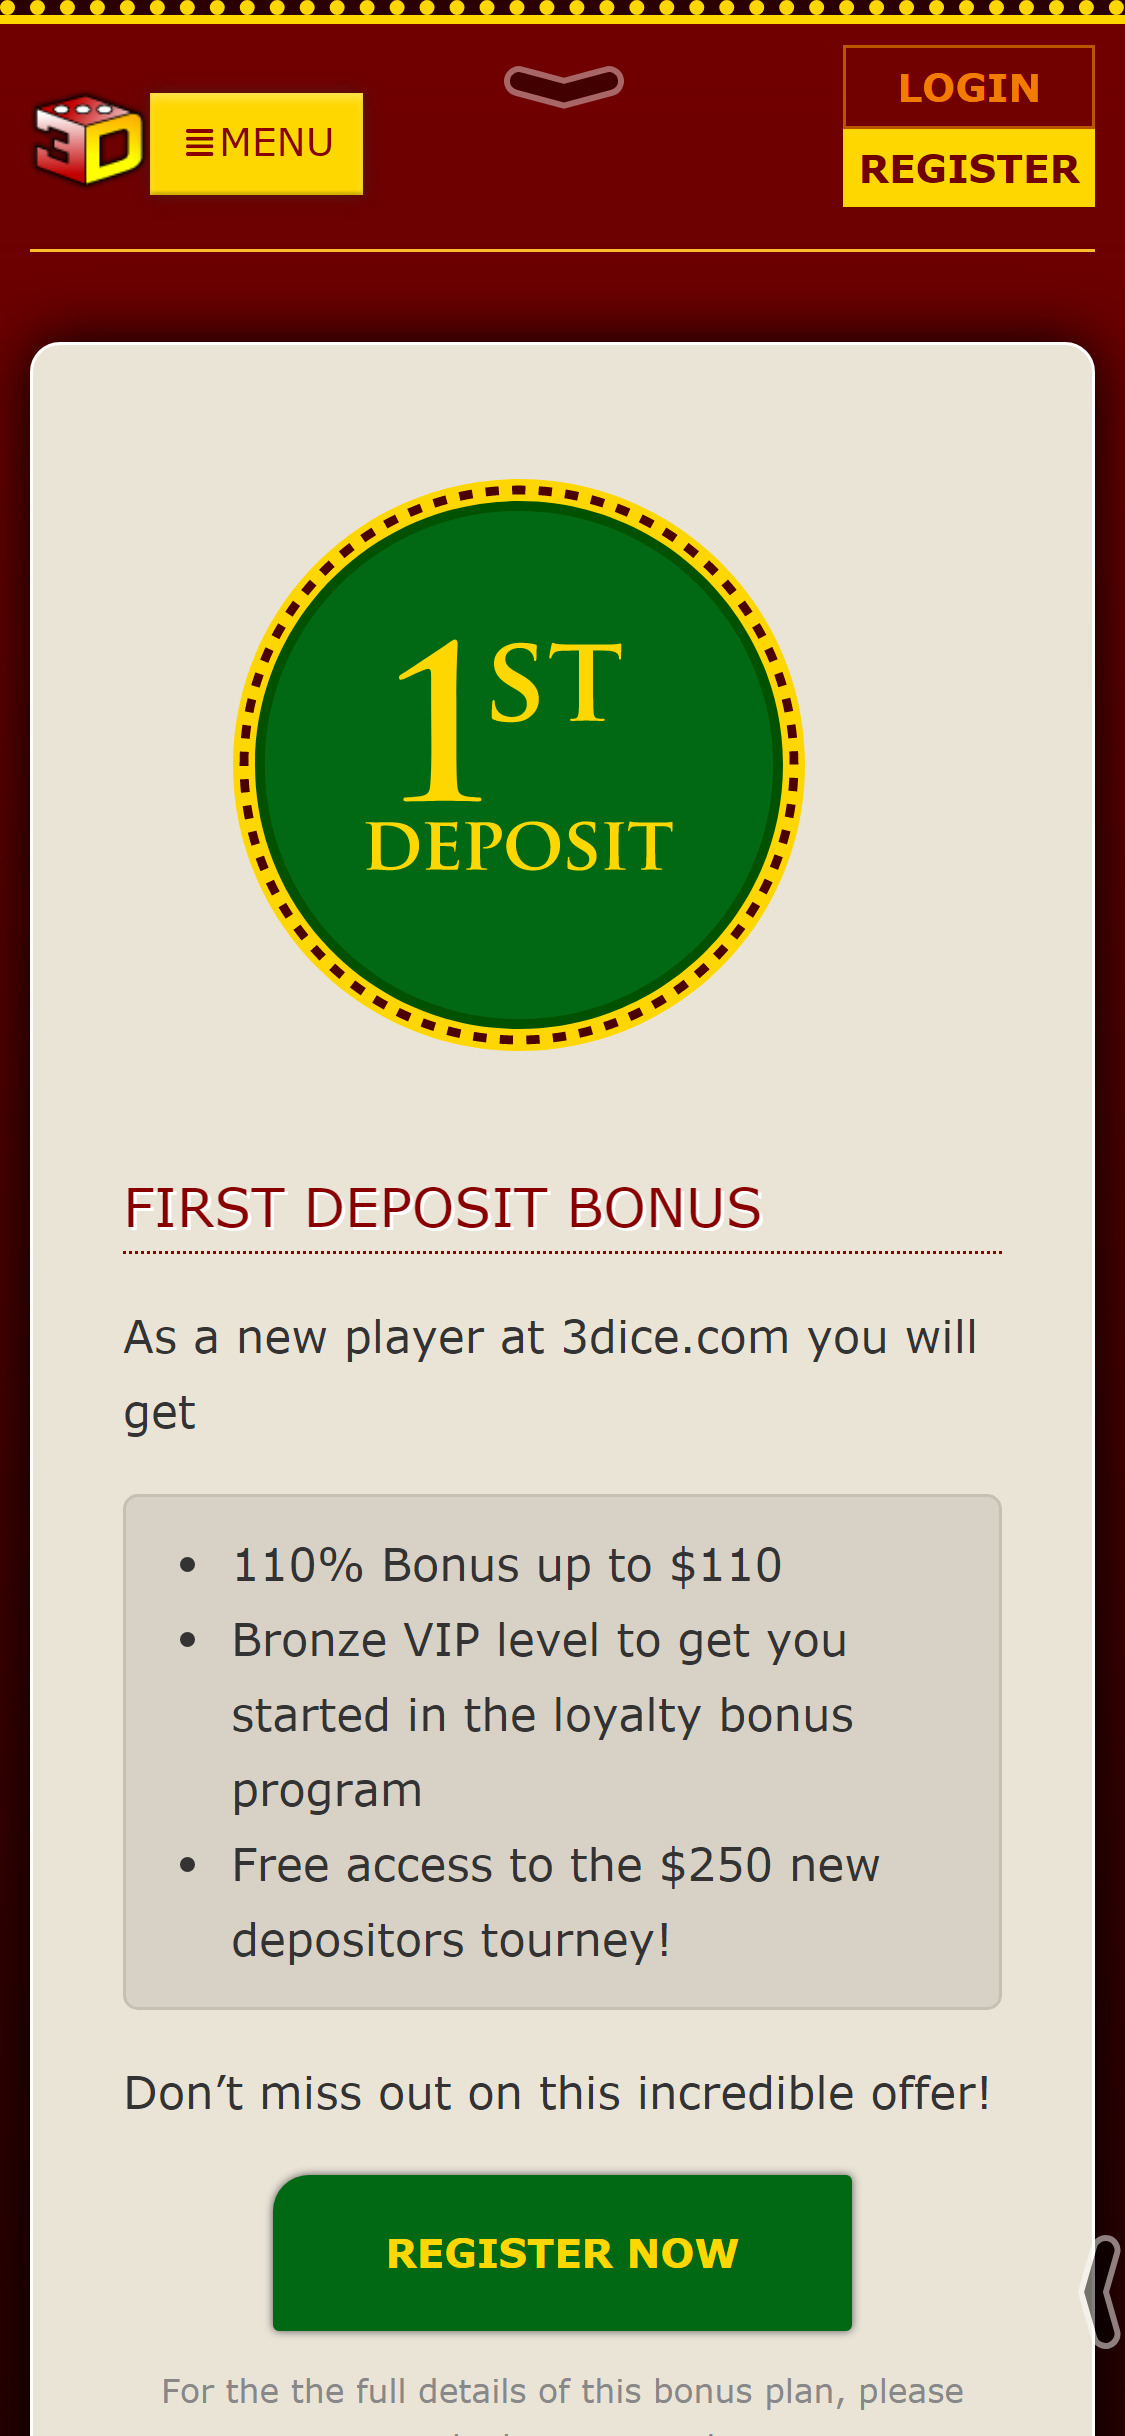 3 Dice Casino Mobile No Deposit Bonus Review